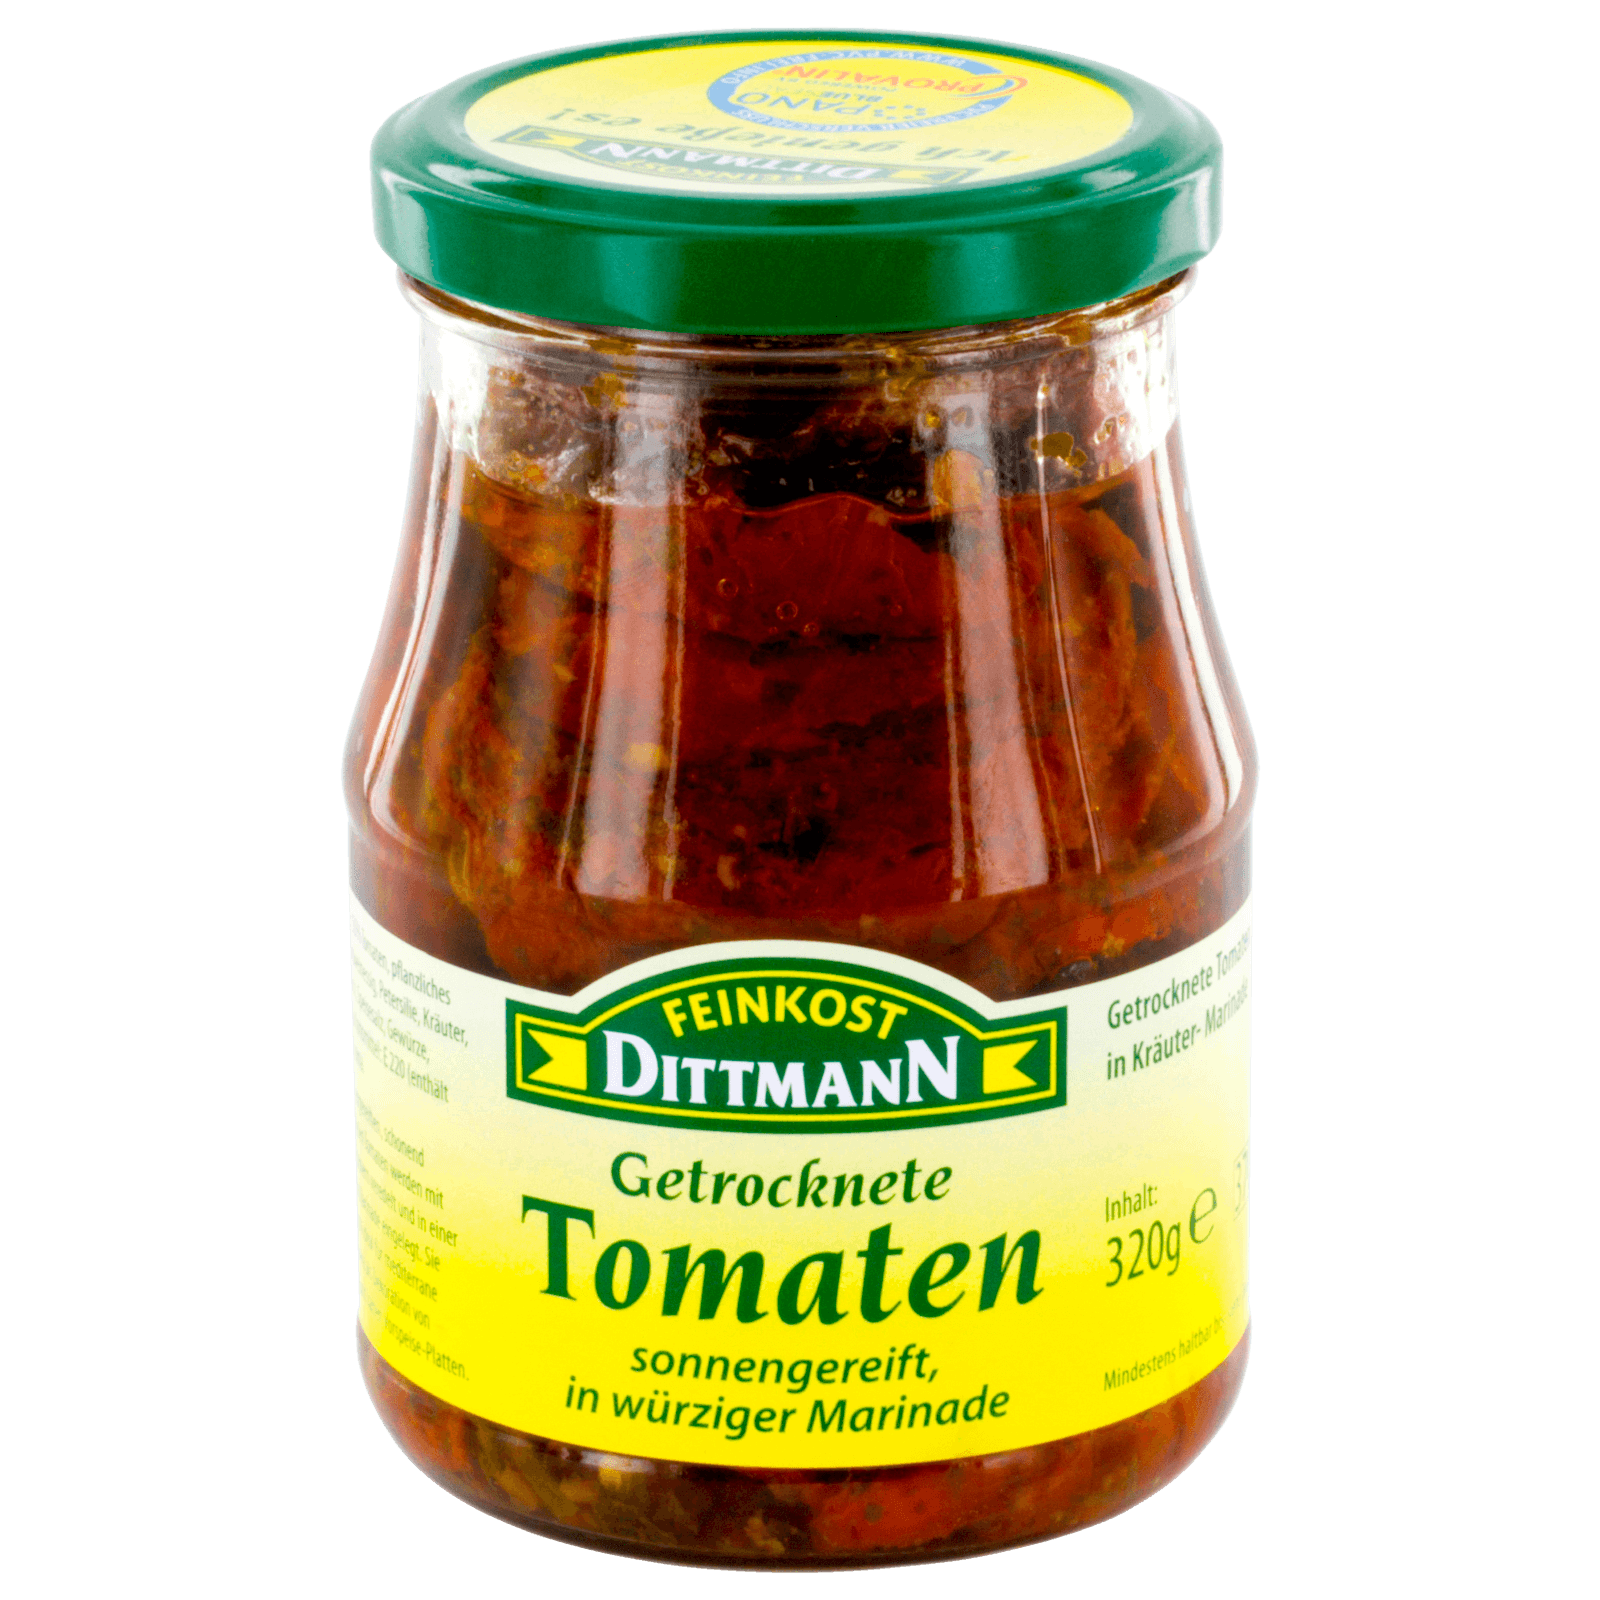 Feinkost Dittmann Getrocknete Tomaten 320g bei REWE online bestellen!